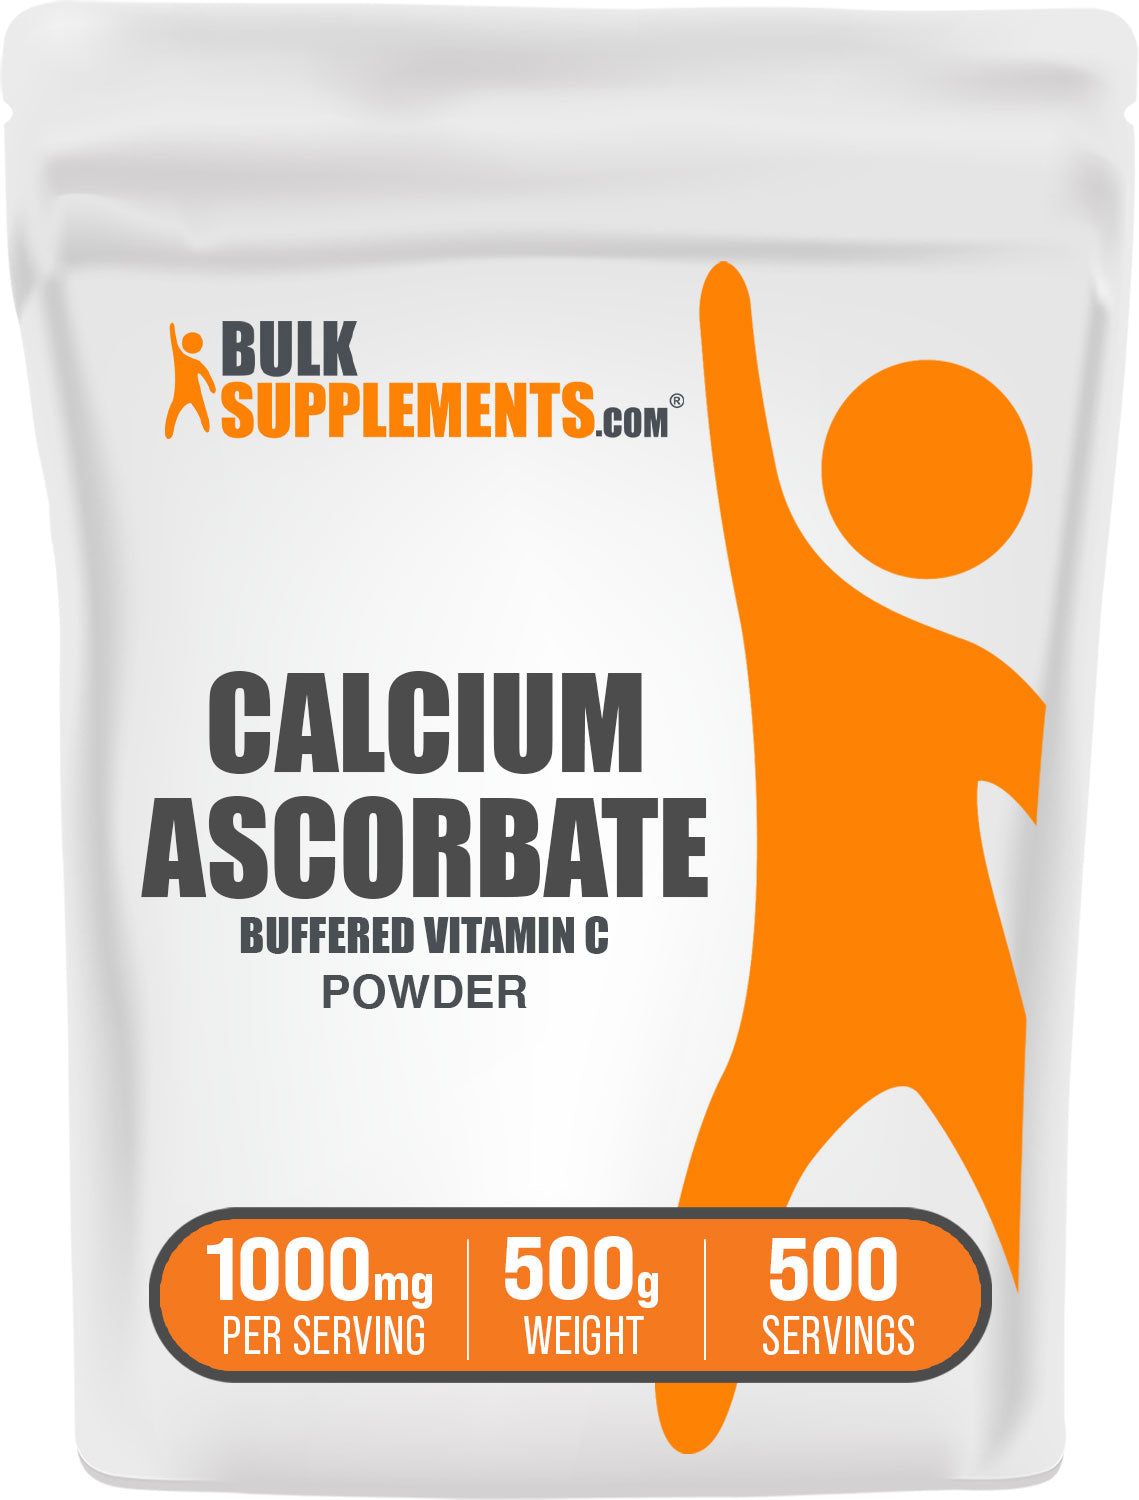 BulkSupplements.com Calcium Ascorbate 500g bag